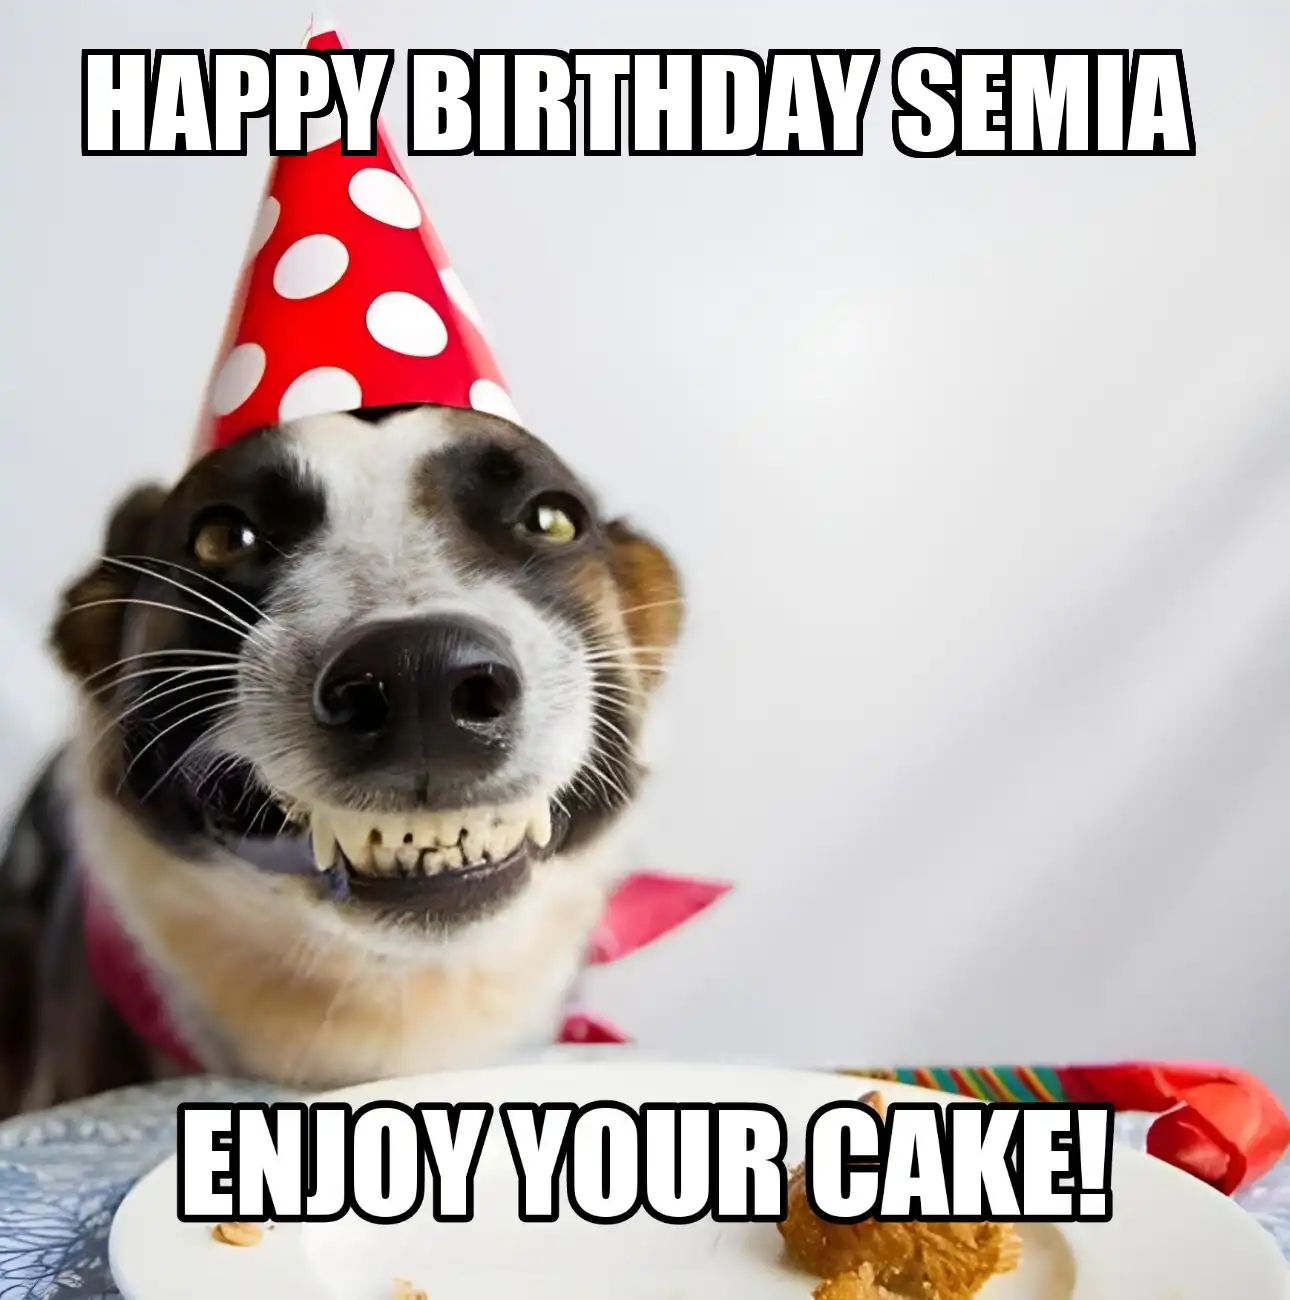 Happy Birthday Semia Enjoy Your Cake Dog Meme